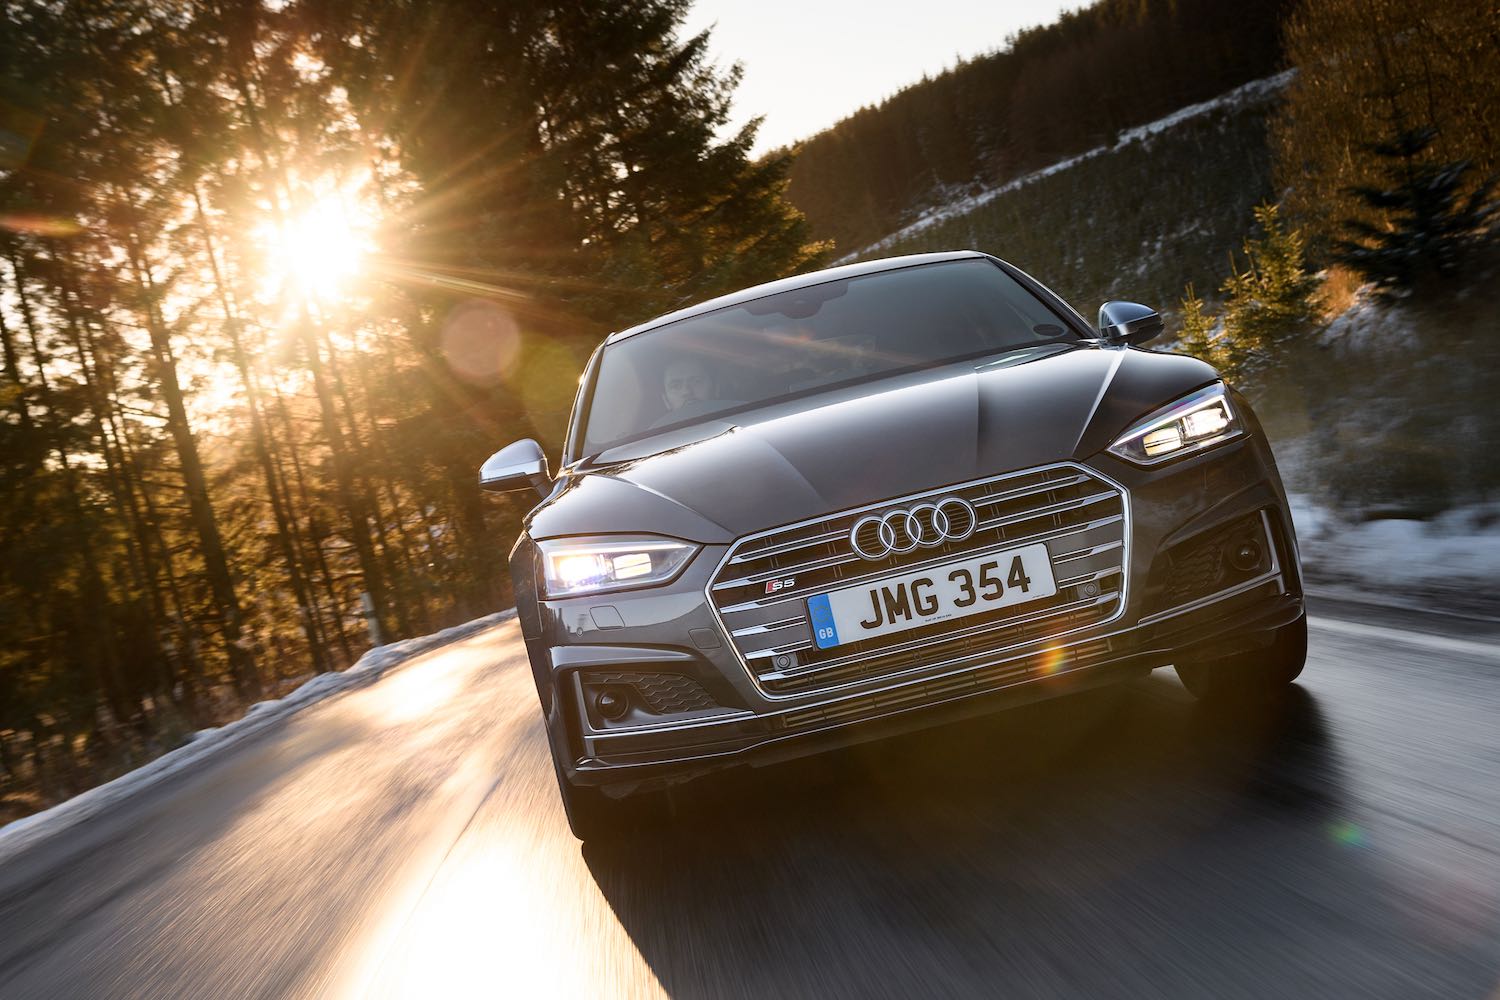 Jonathan Humphrey reviews the Audi S5 Sportback for Drive.co.uk-14